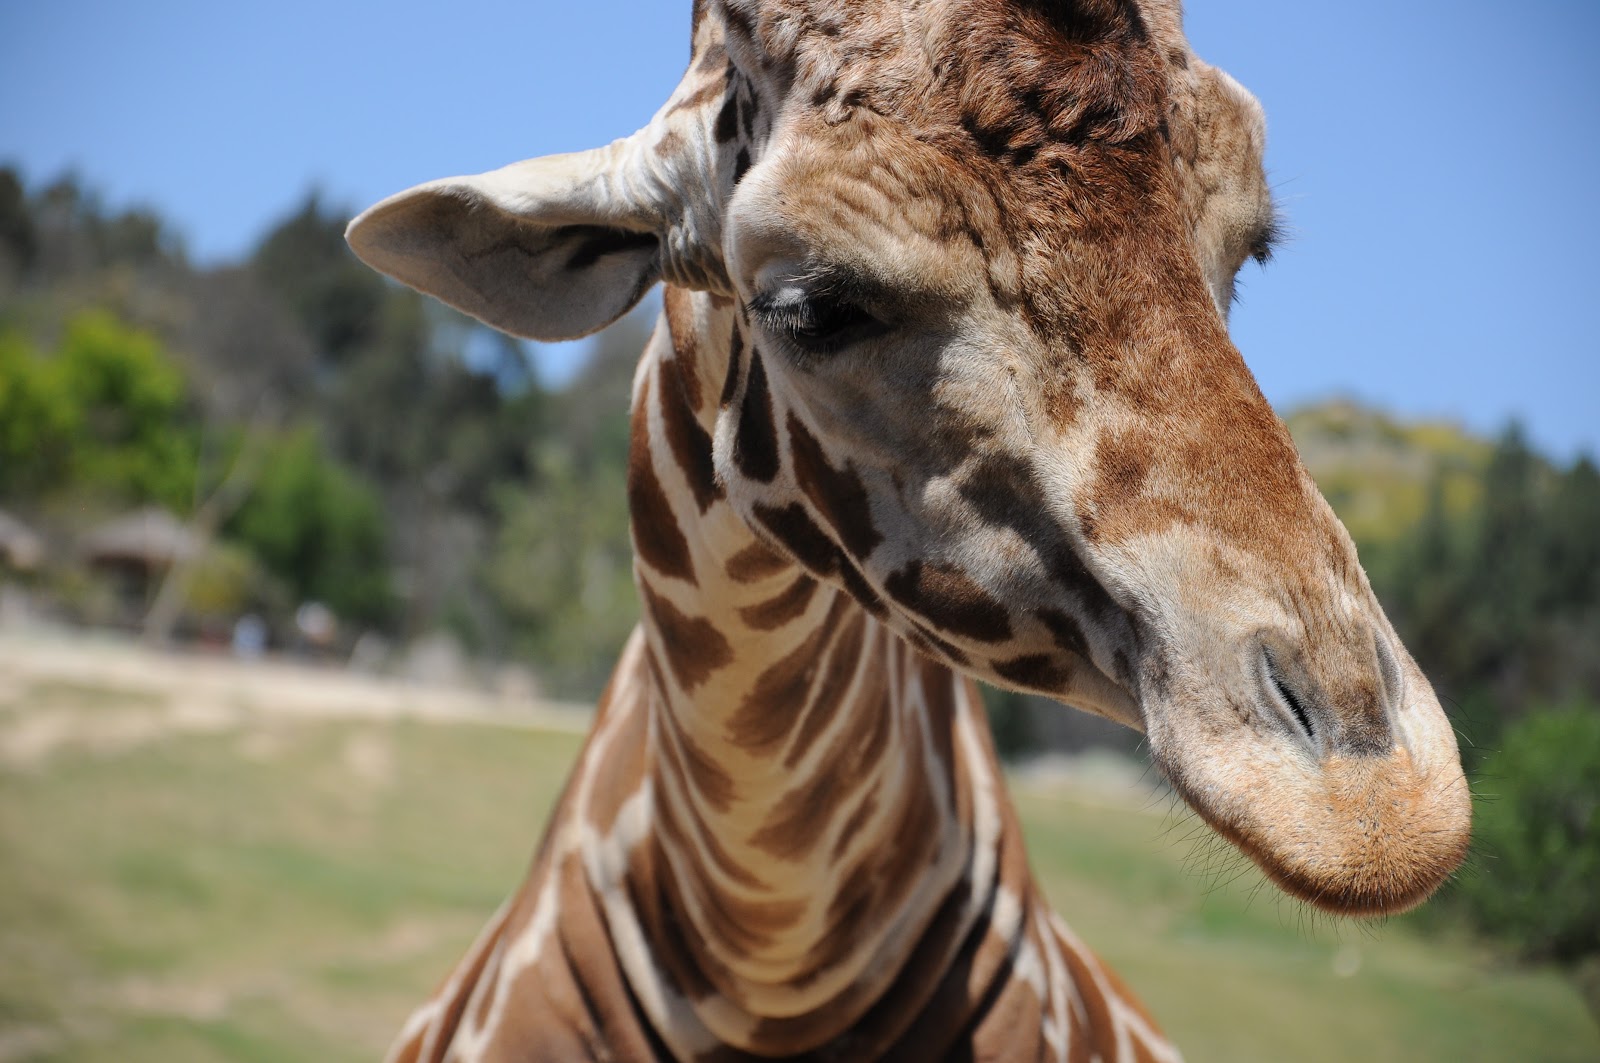 Giraffe at LA Zoo Top 3 Weekend Trips from Los Angeles